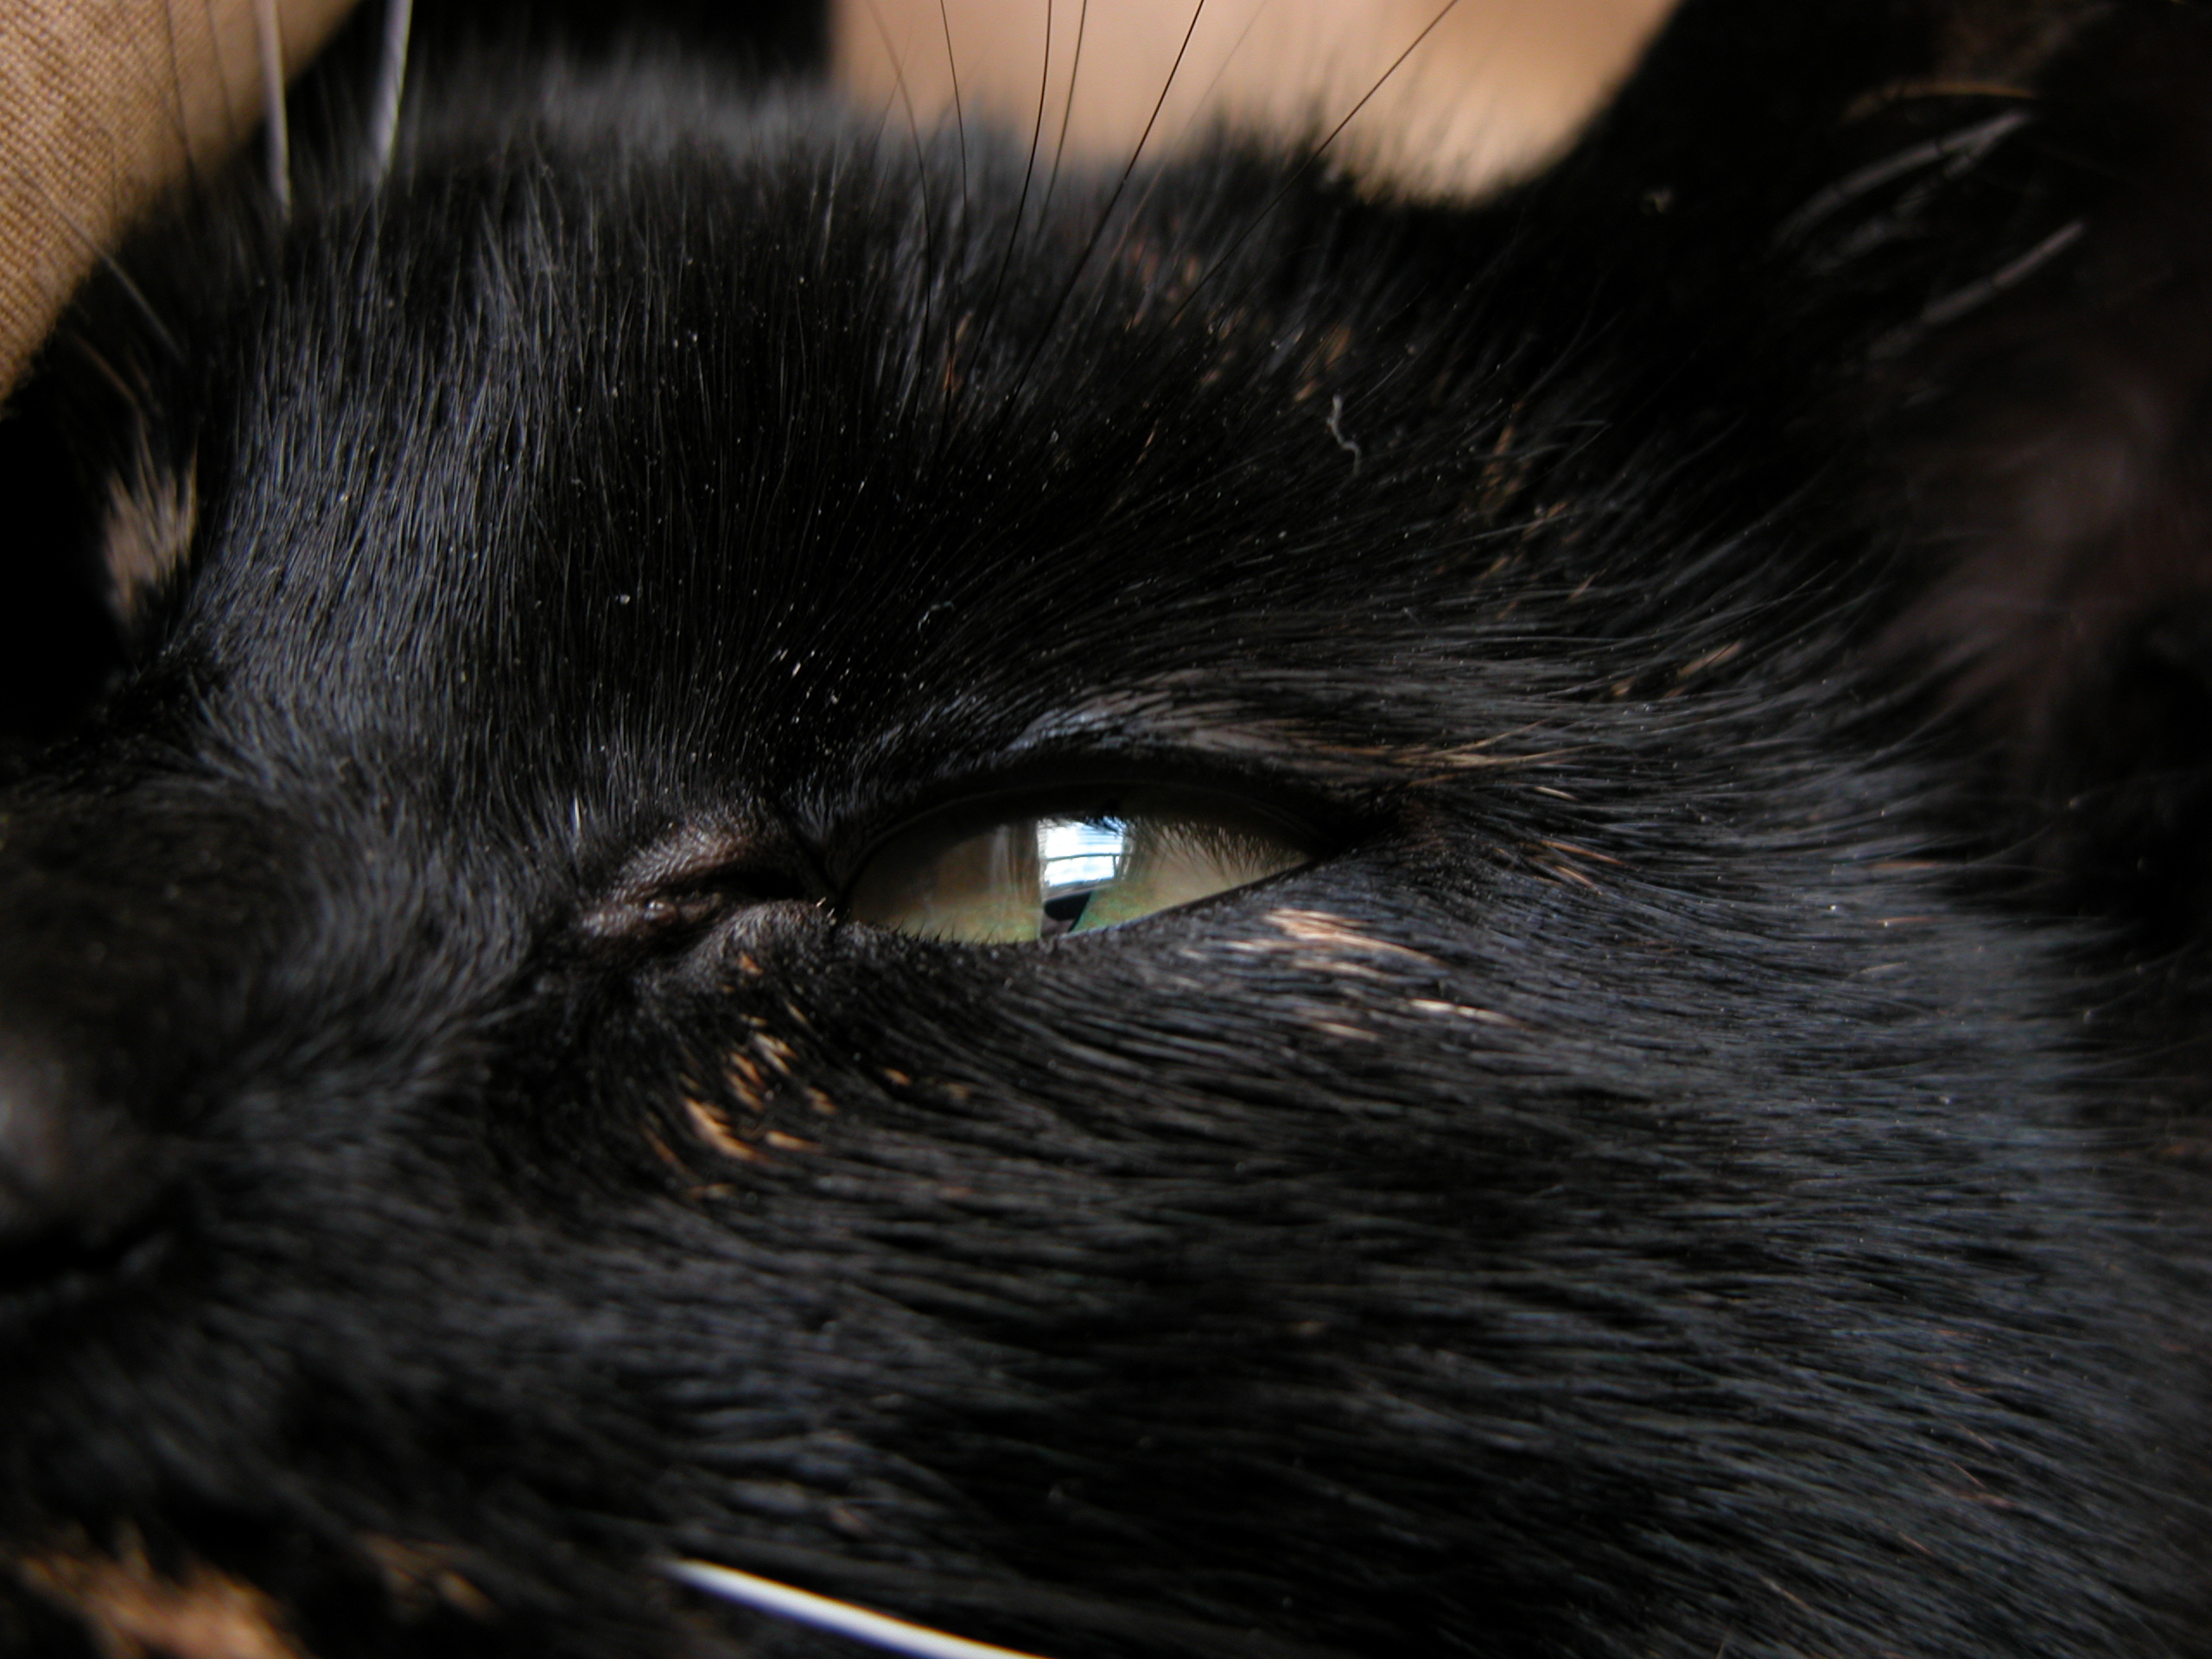 cat black and white cute head eye eyes closed green hair hairs fur